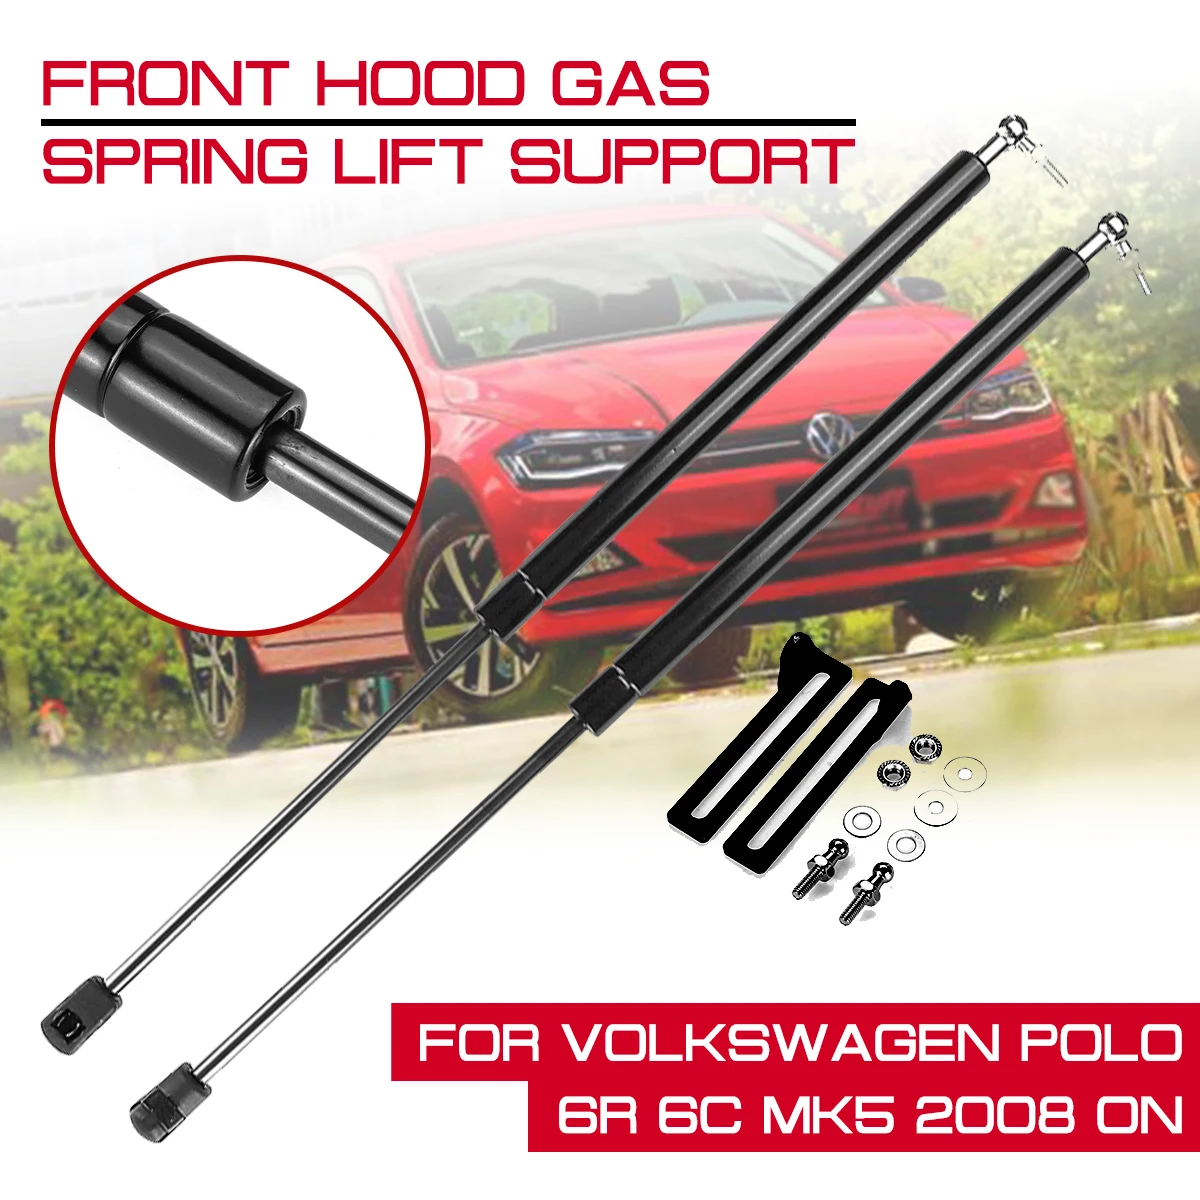 

For Volkswagen For VW Polo 6R 6C MK5 2008 2009+ Refit Bonnet Hood Gas Shock Lift Strut Bars Support Rod Gas Spring